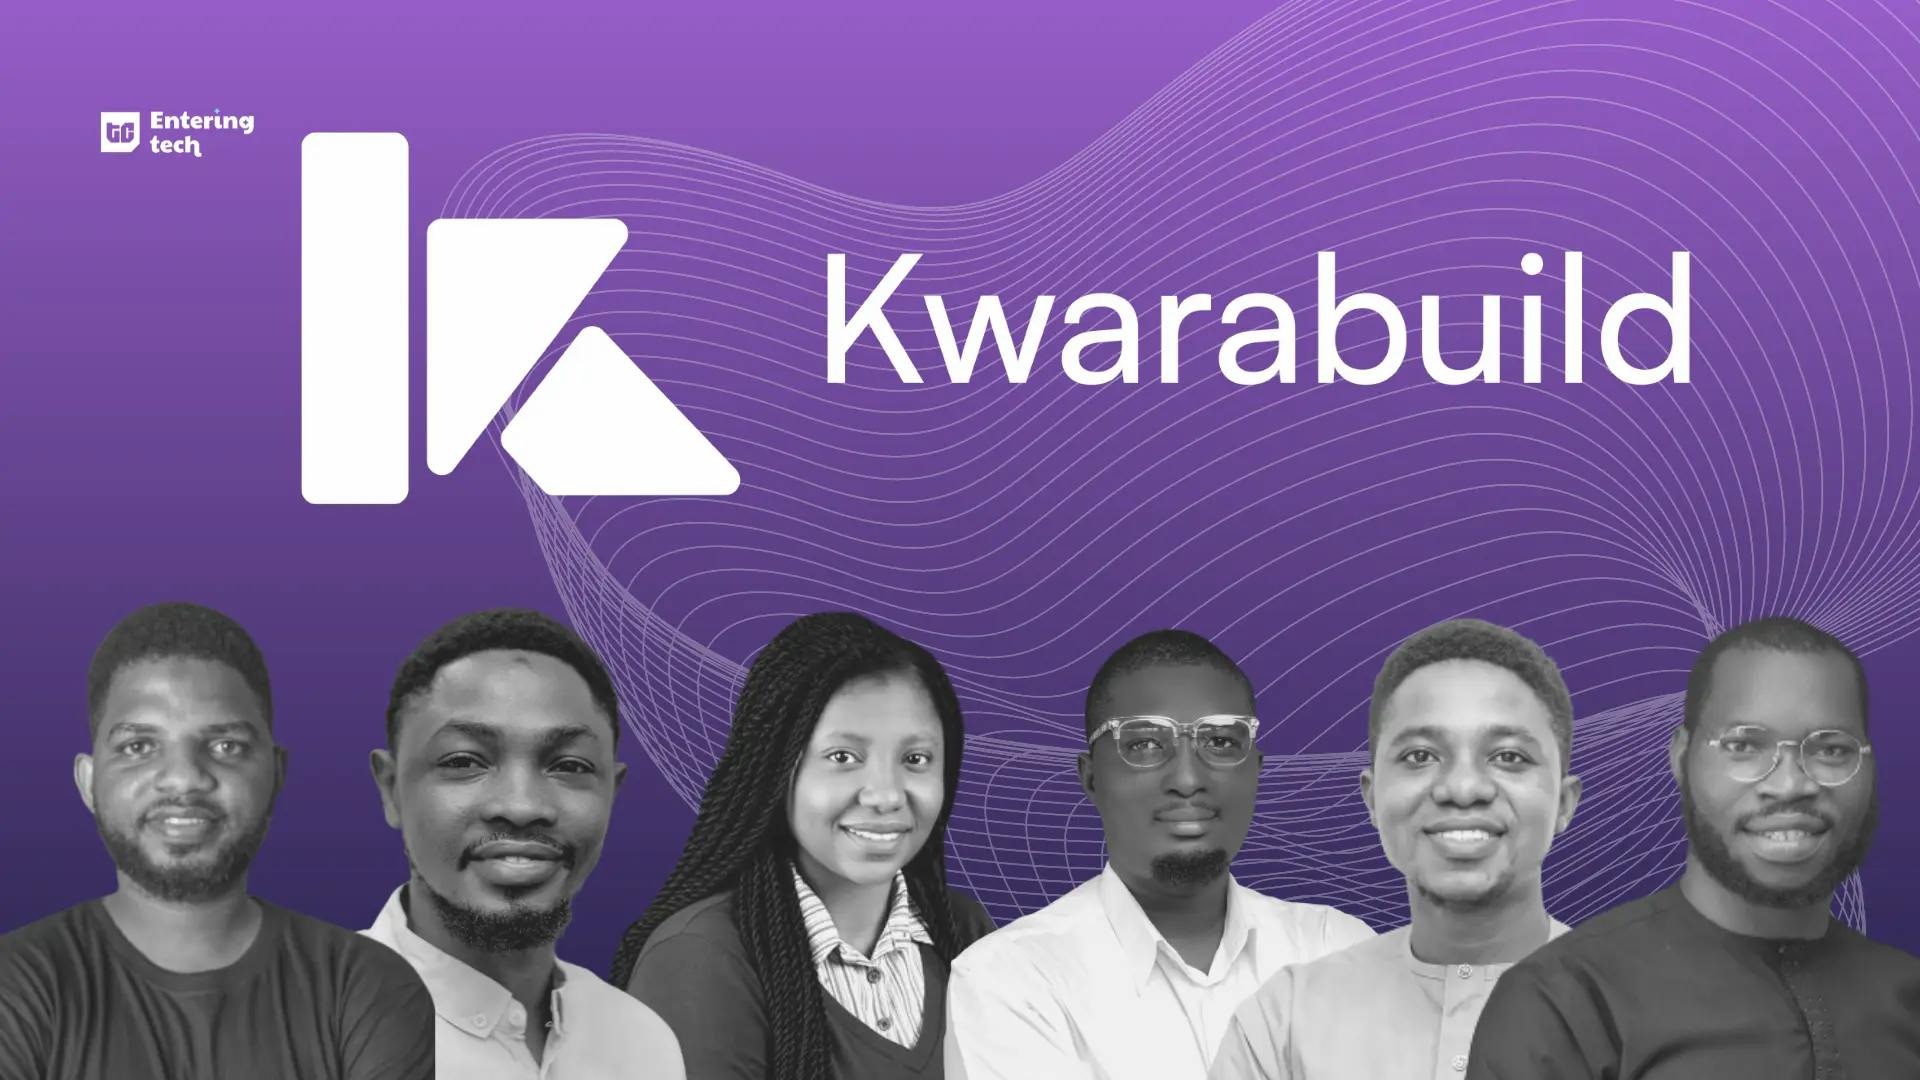 How Kwarabuild helps newbies in tech